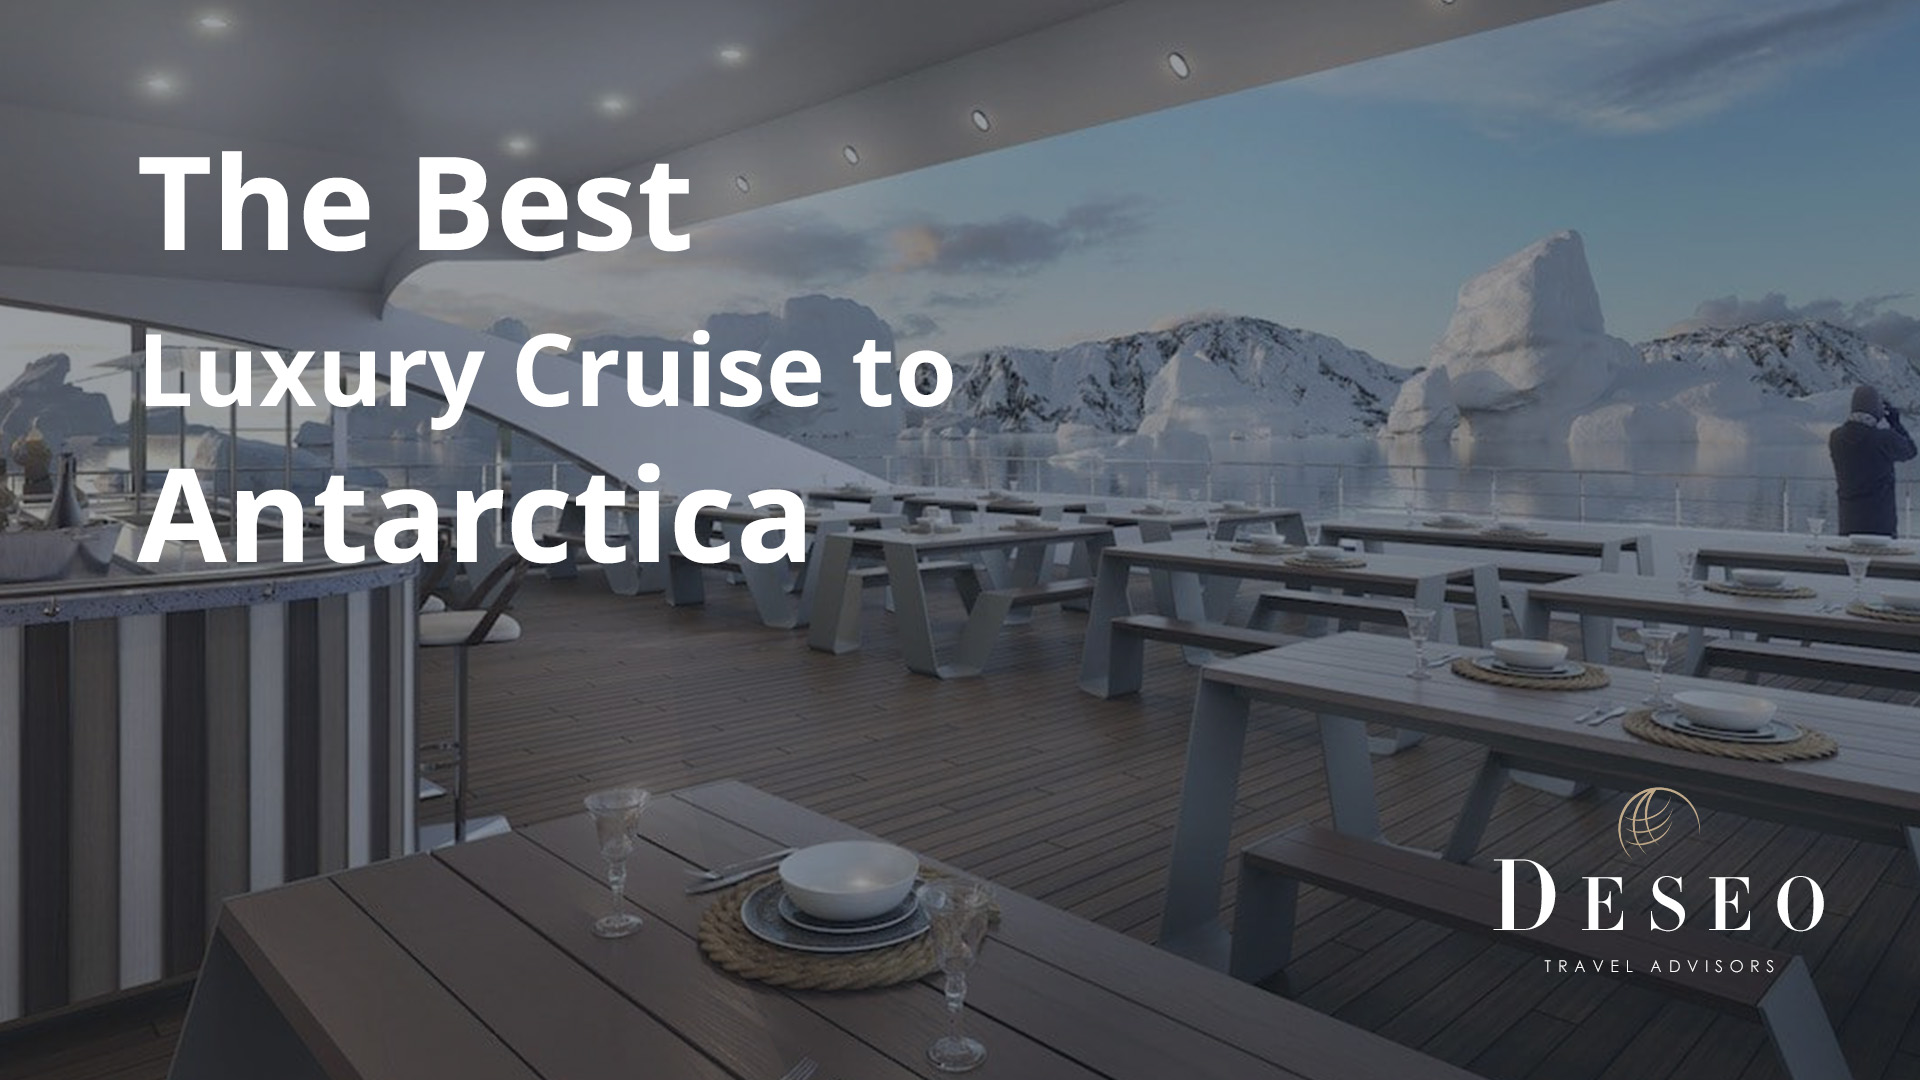 The Best Luxury Cruise to Antarctica